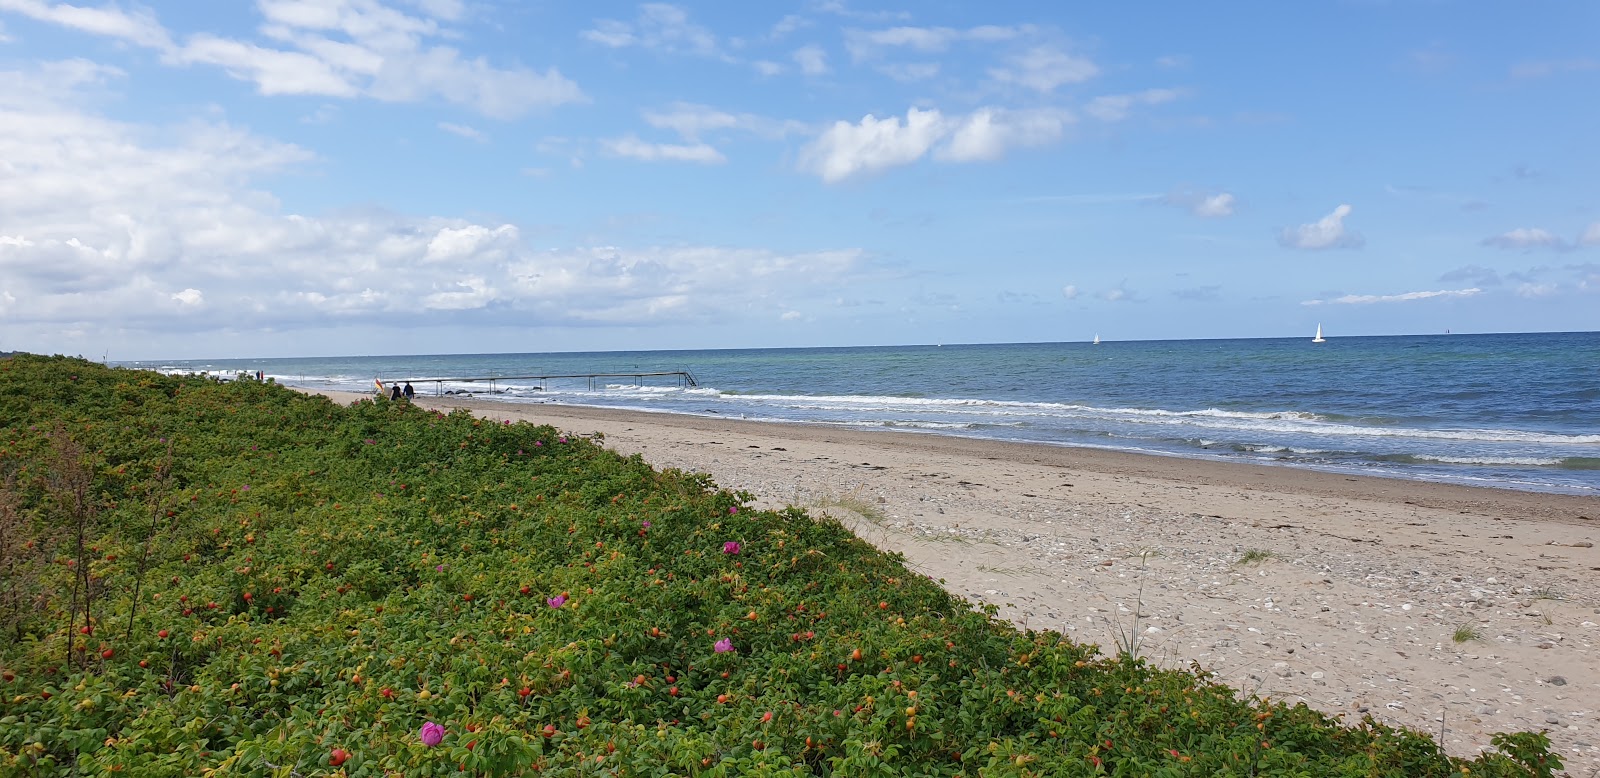 Foto de Smidstrup Beach con playa amplia